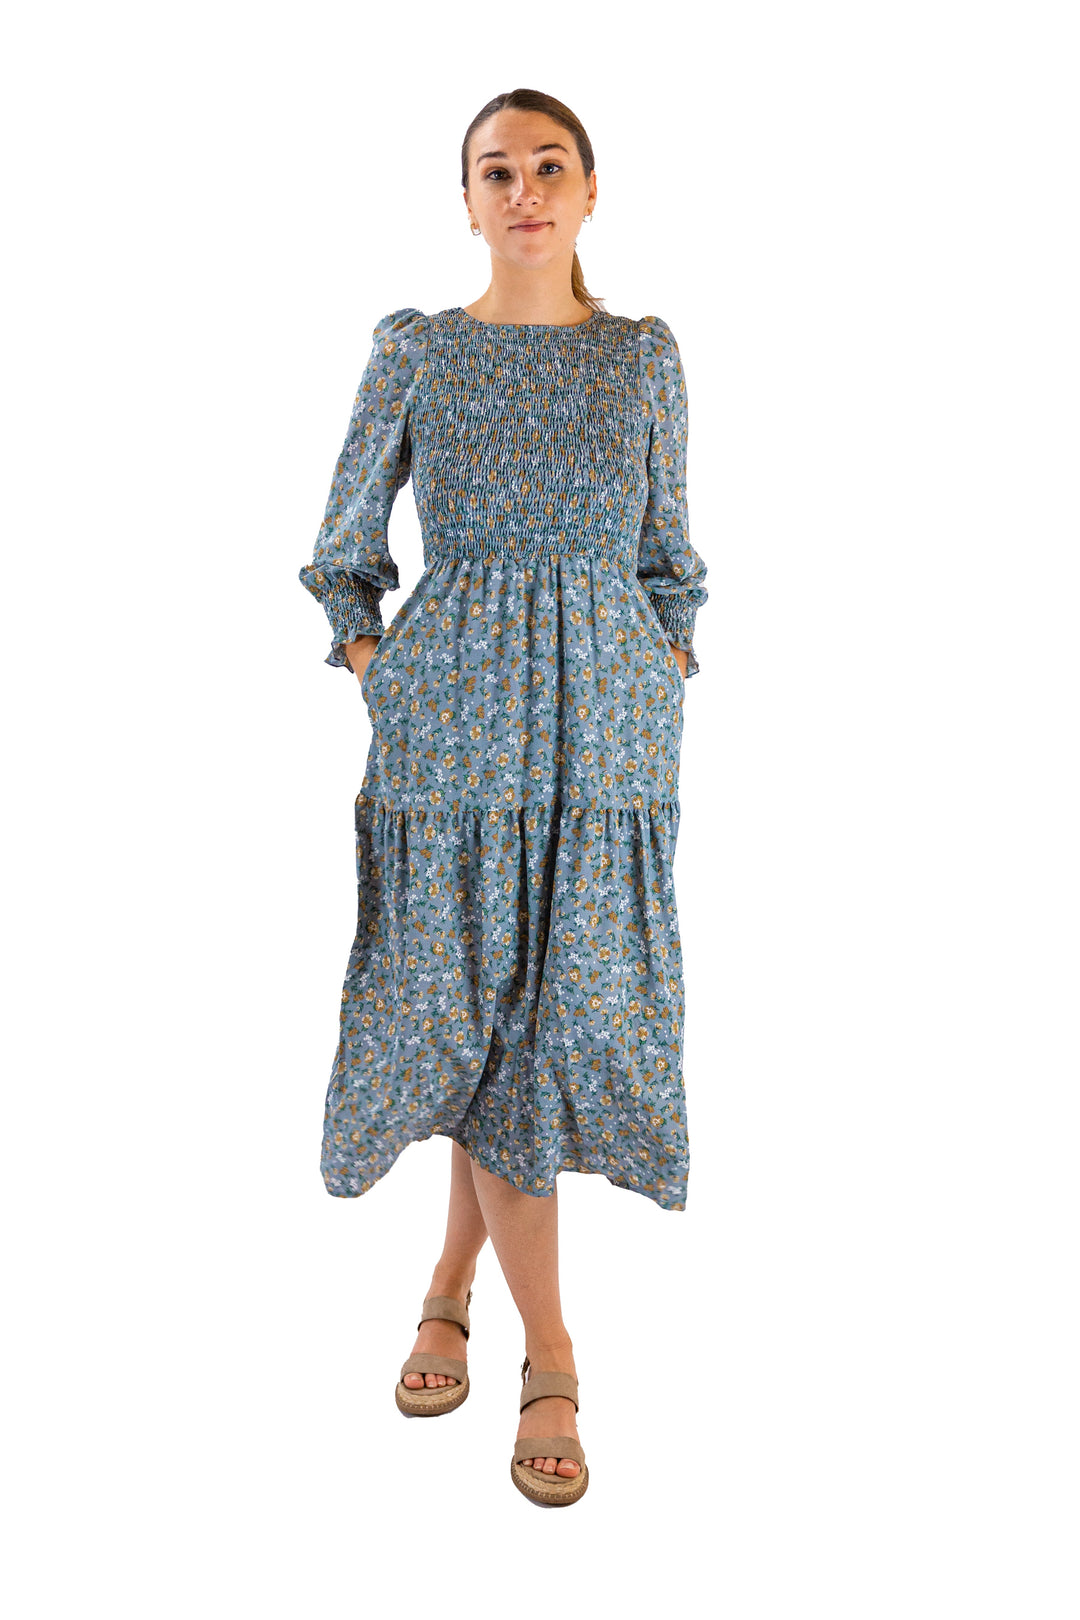 Fabonics Enchanted Garden Blue Floral Midi Dress with Three-Quarter Sleeves